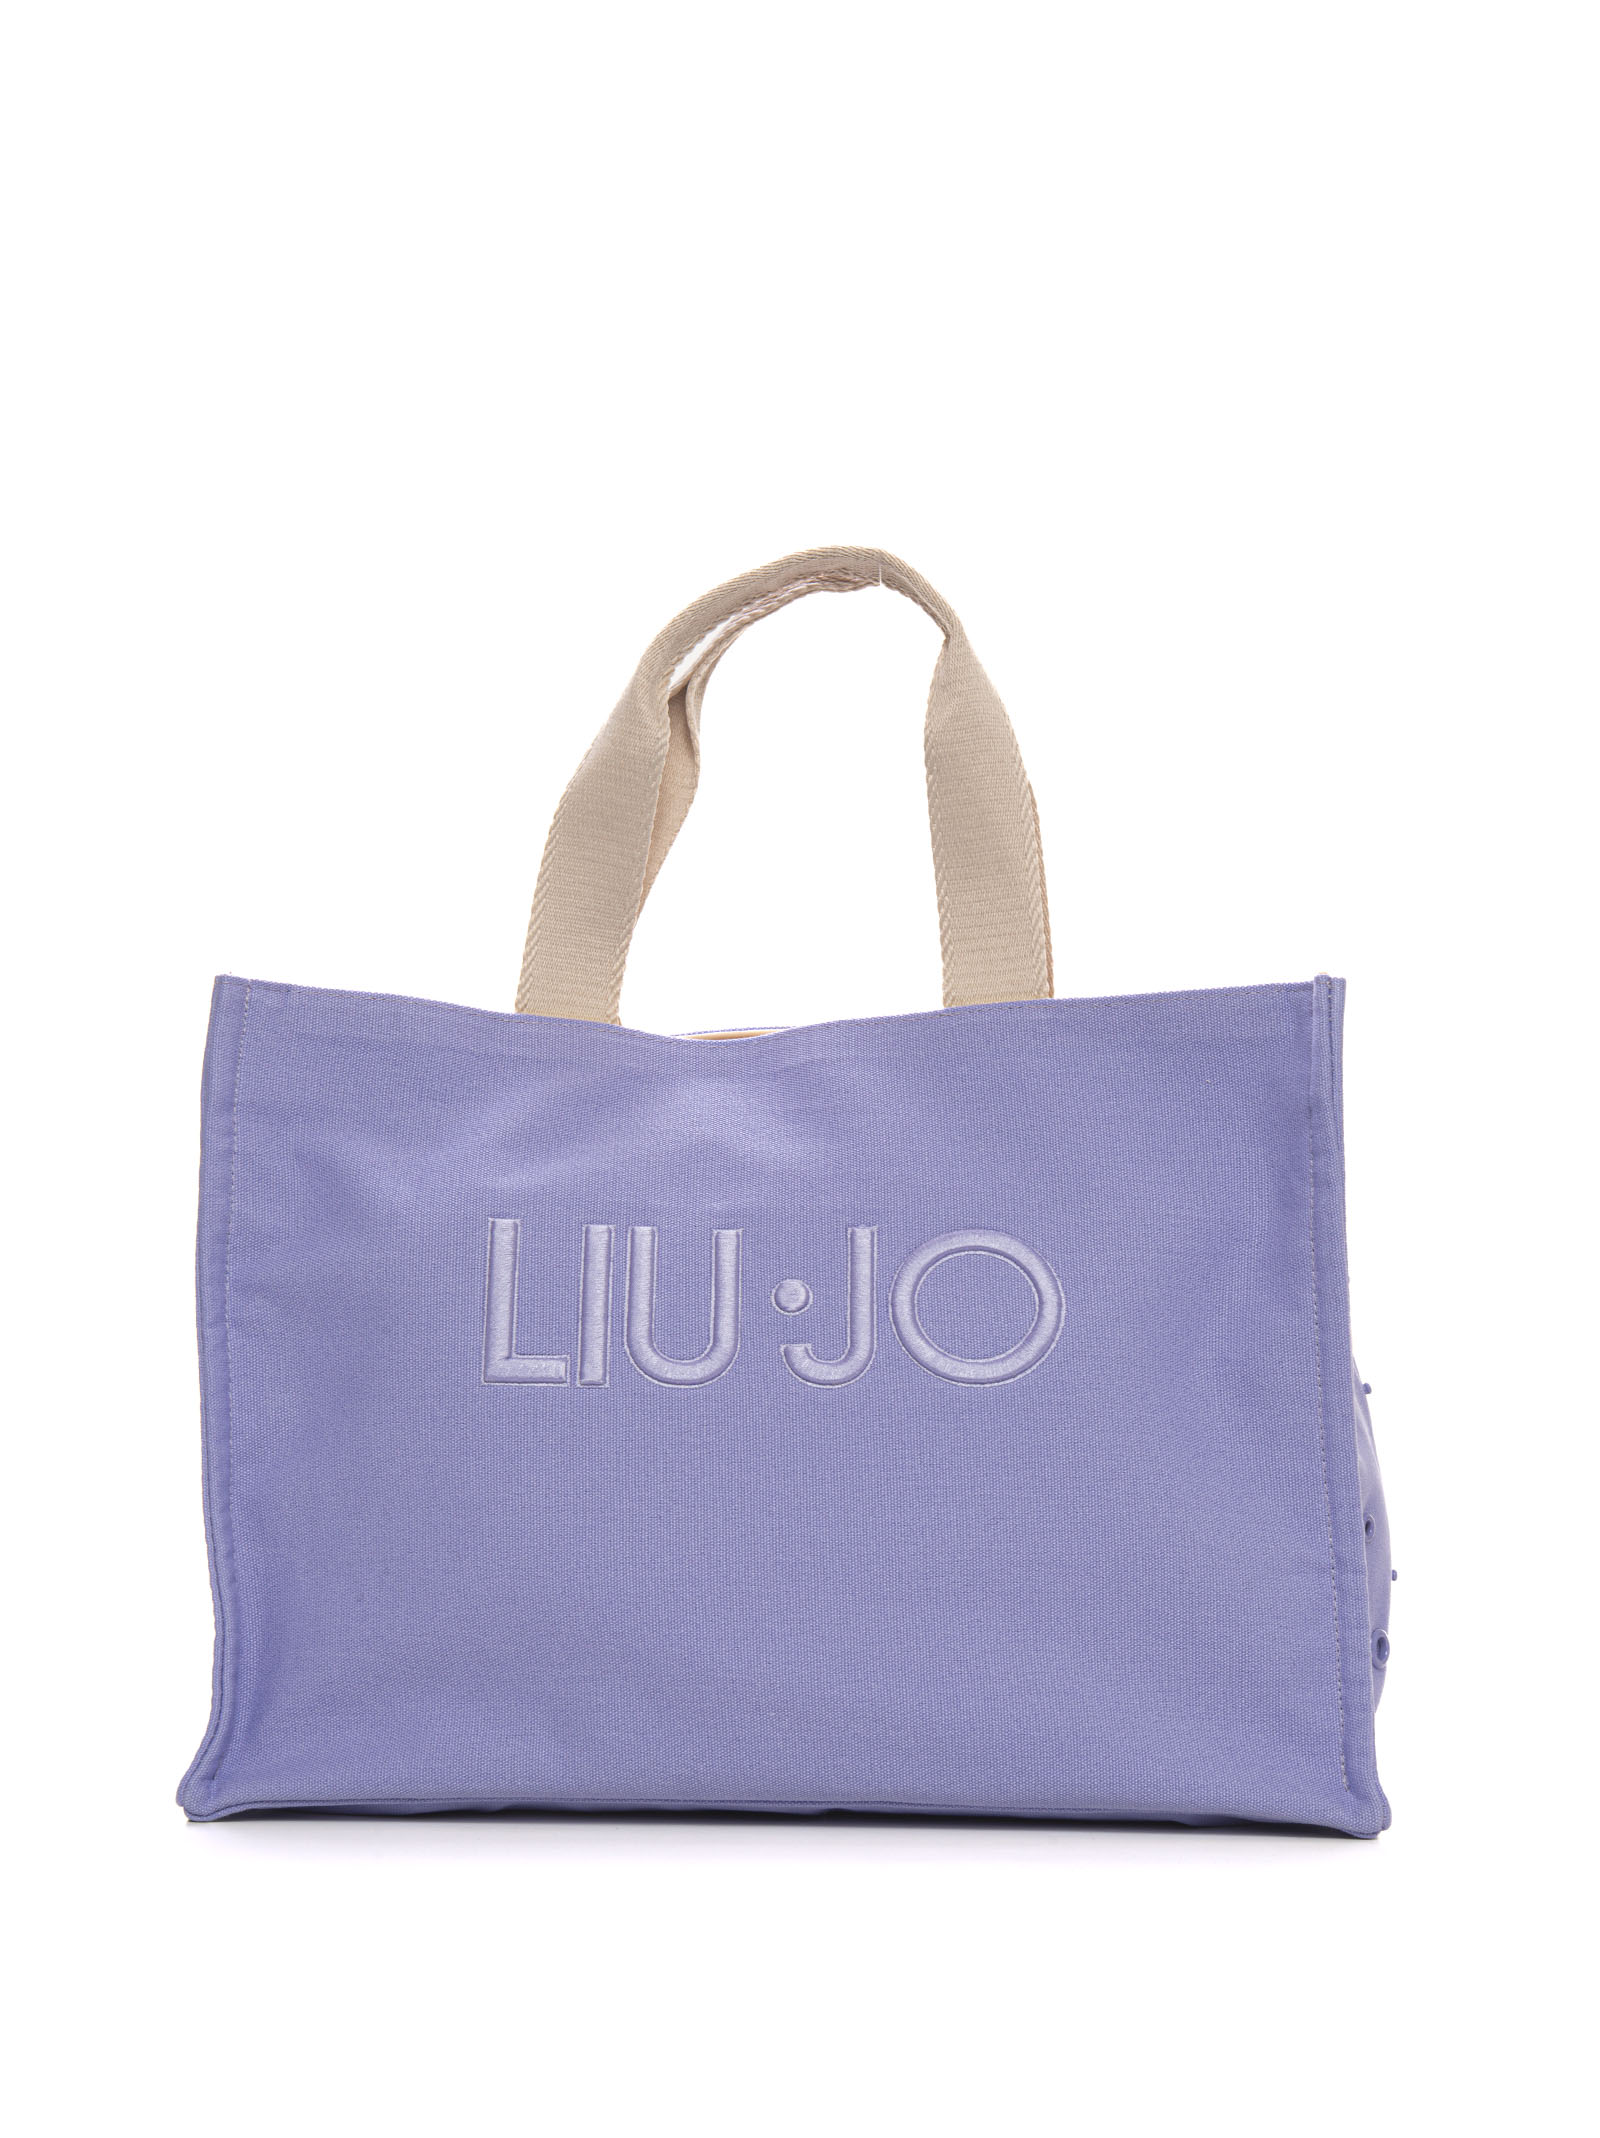 Liu •jo L Tote Canvas Shopping Bag In Wisteria